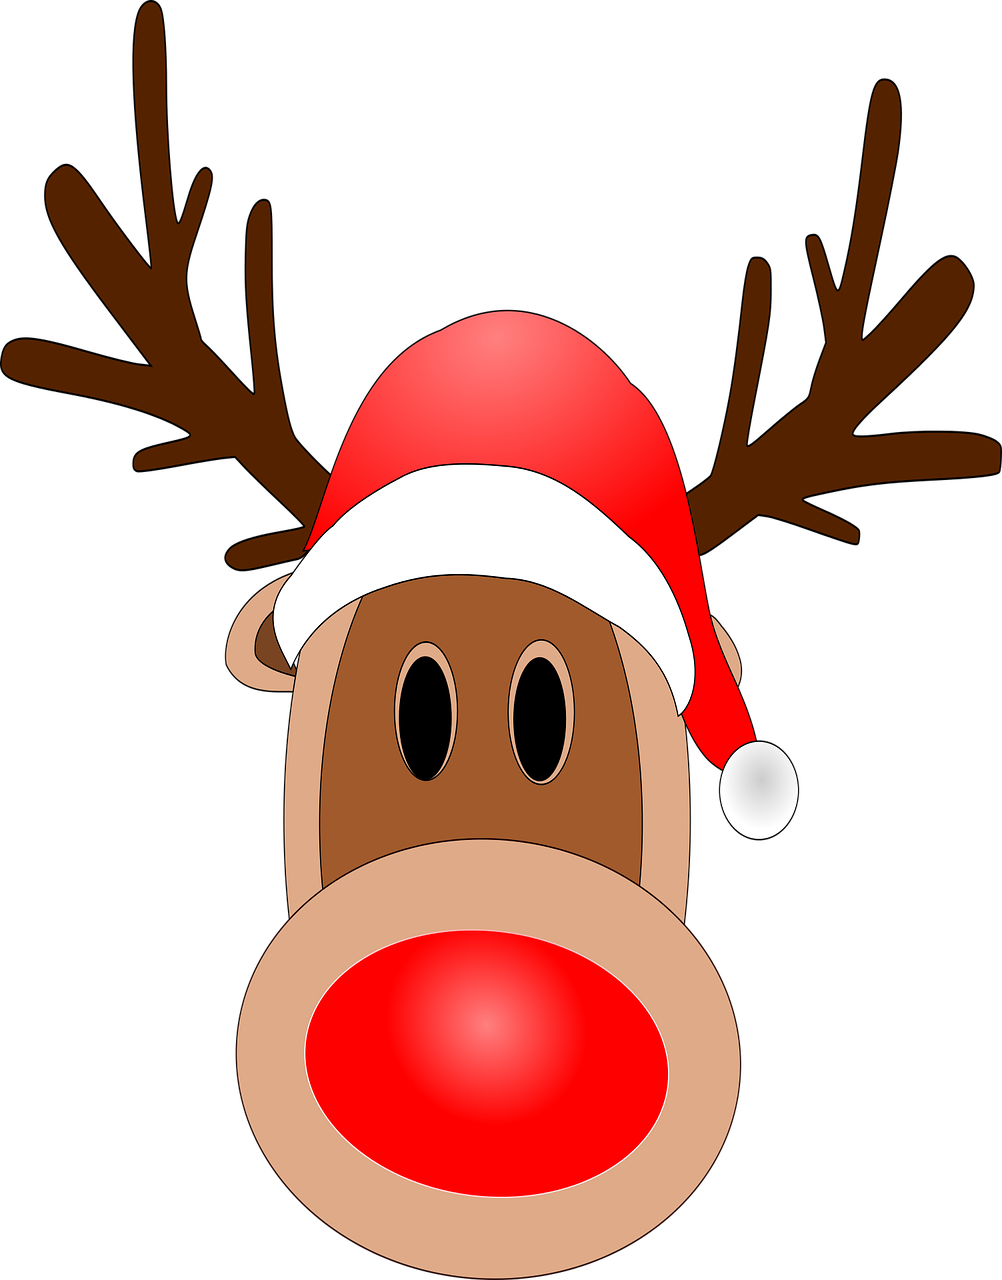 Download free photo of Reindeer,animal,cartoon,deer,winter - from